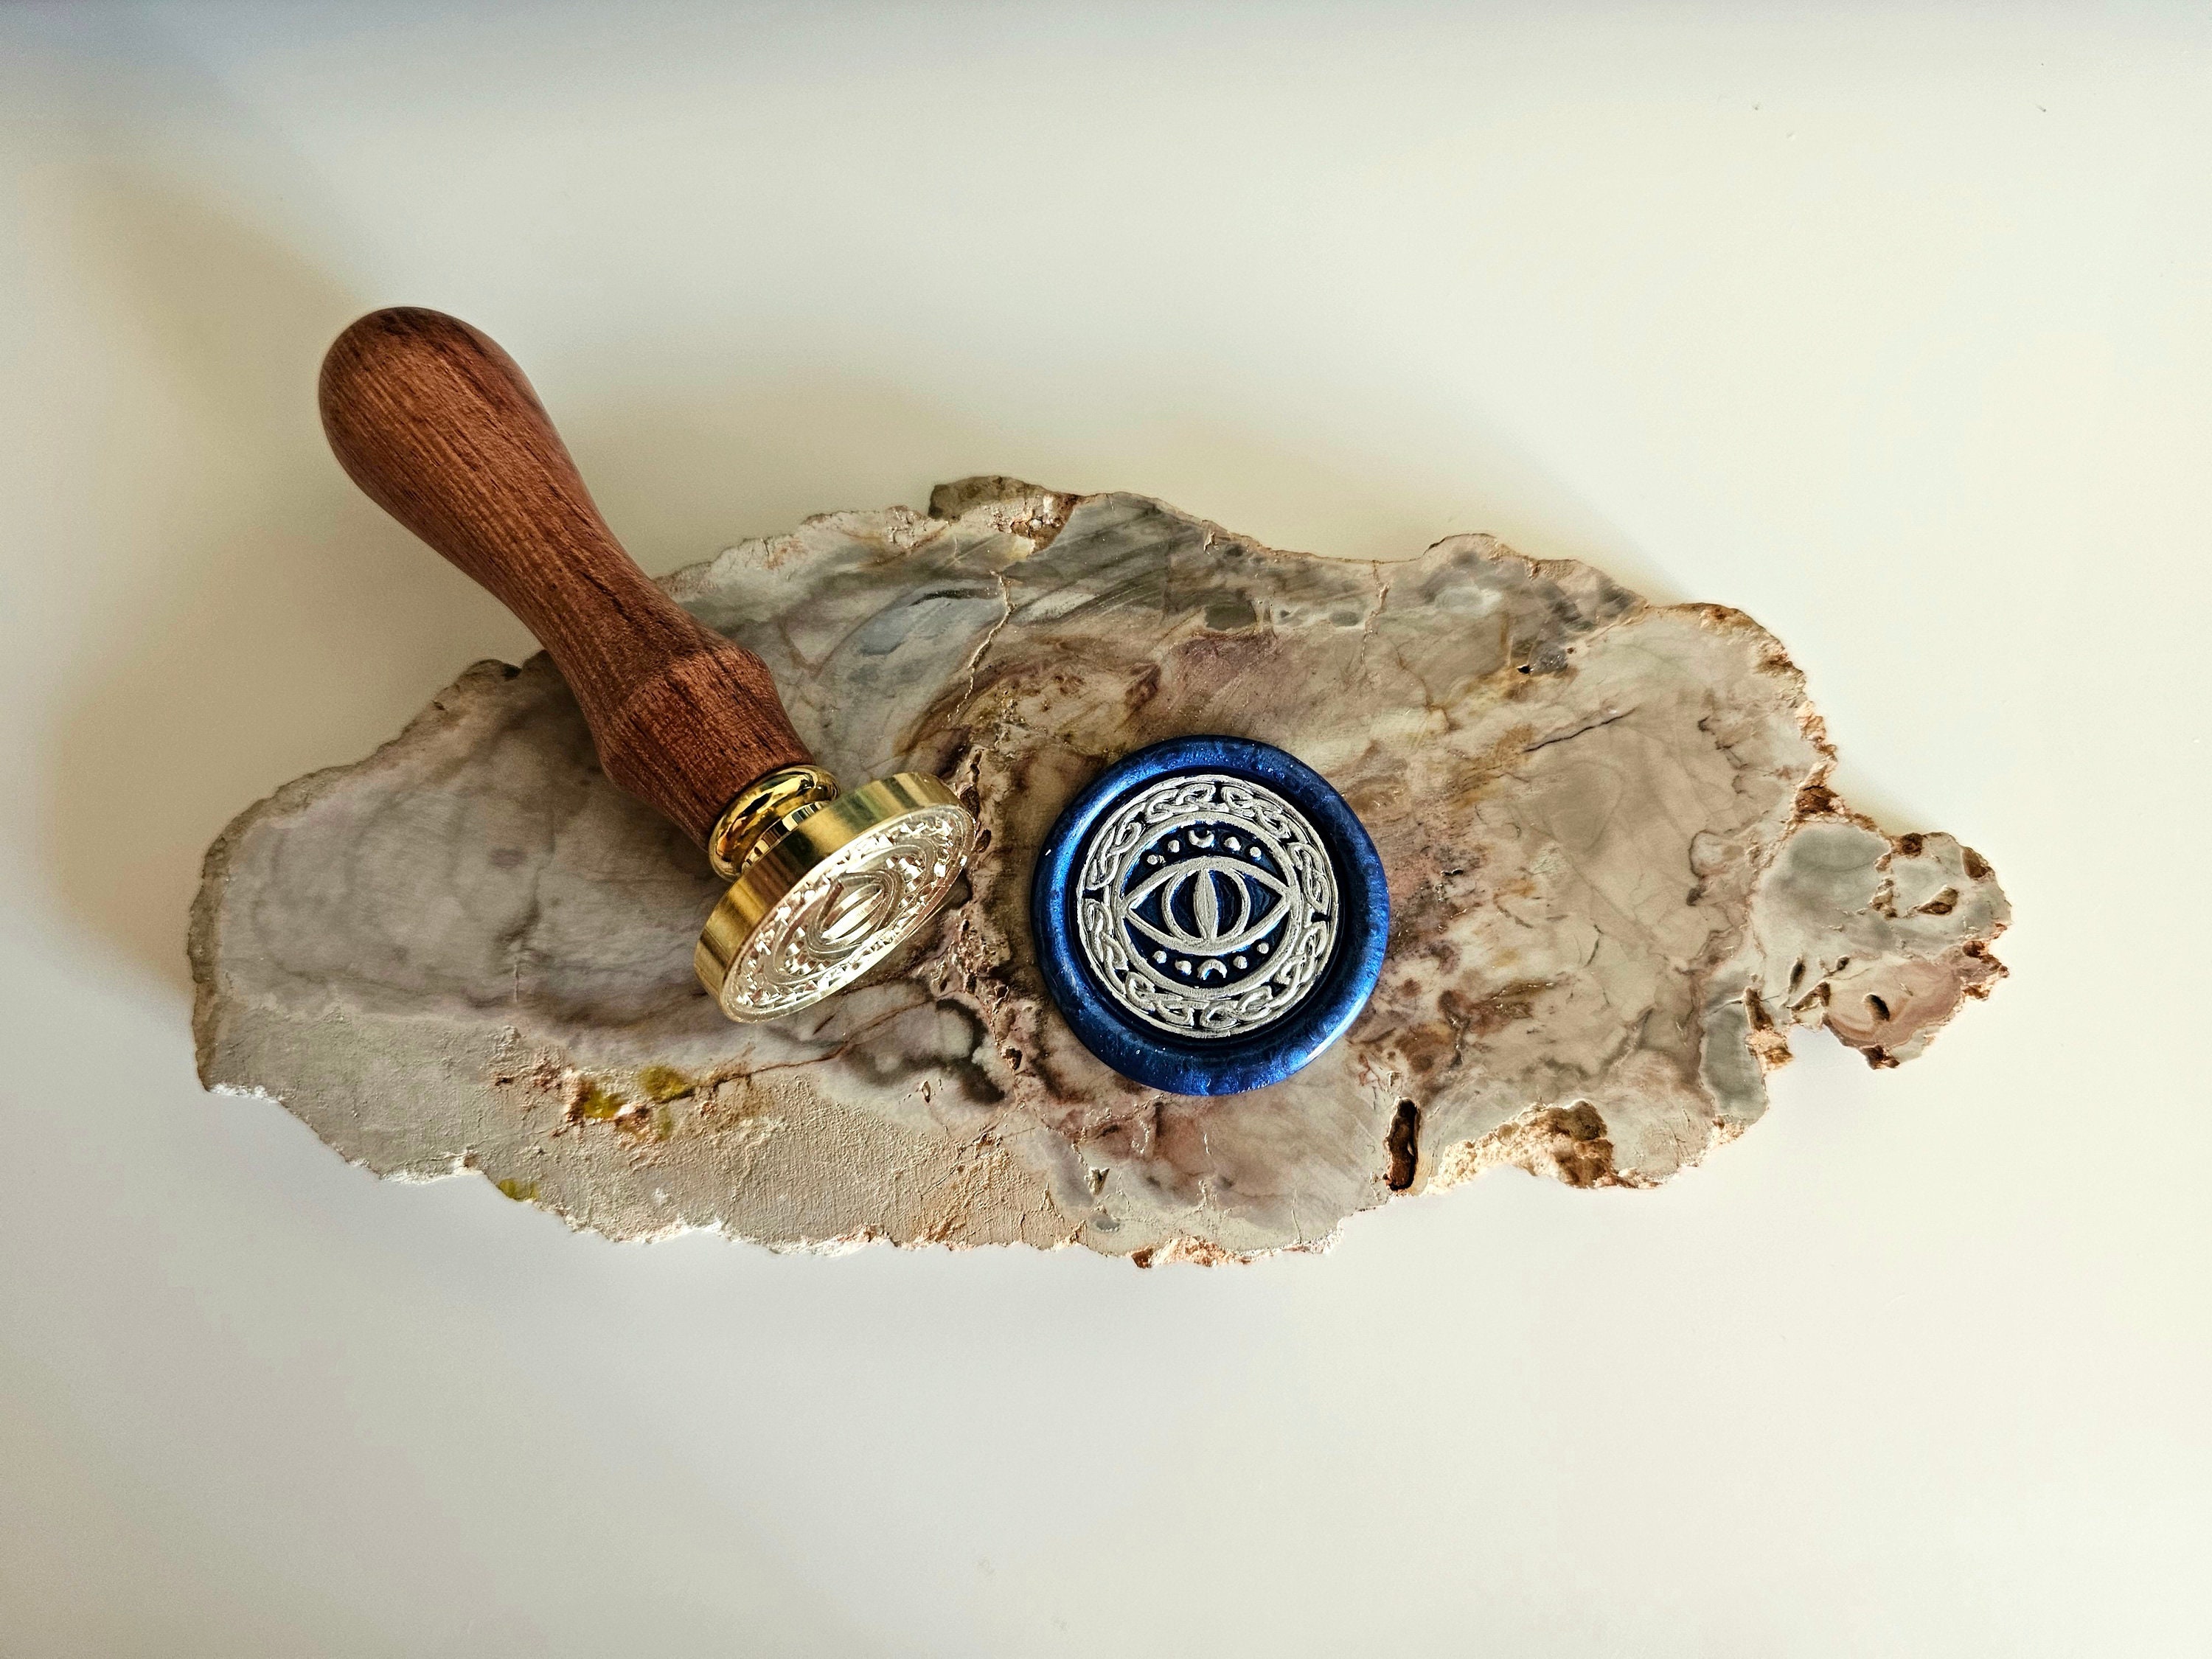 Illuminati Seal Wax Seal Bronze Seal with Wooden Handle- Eye of Providence